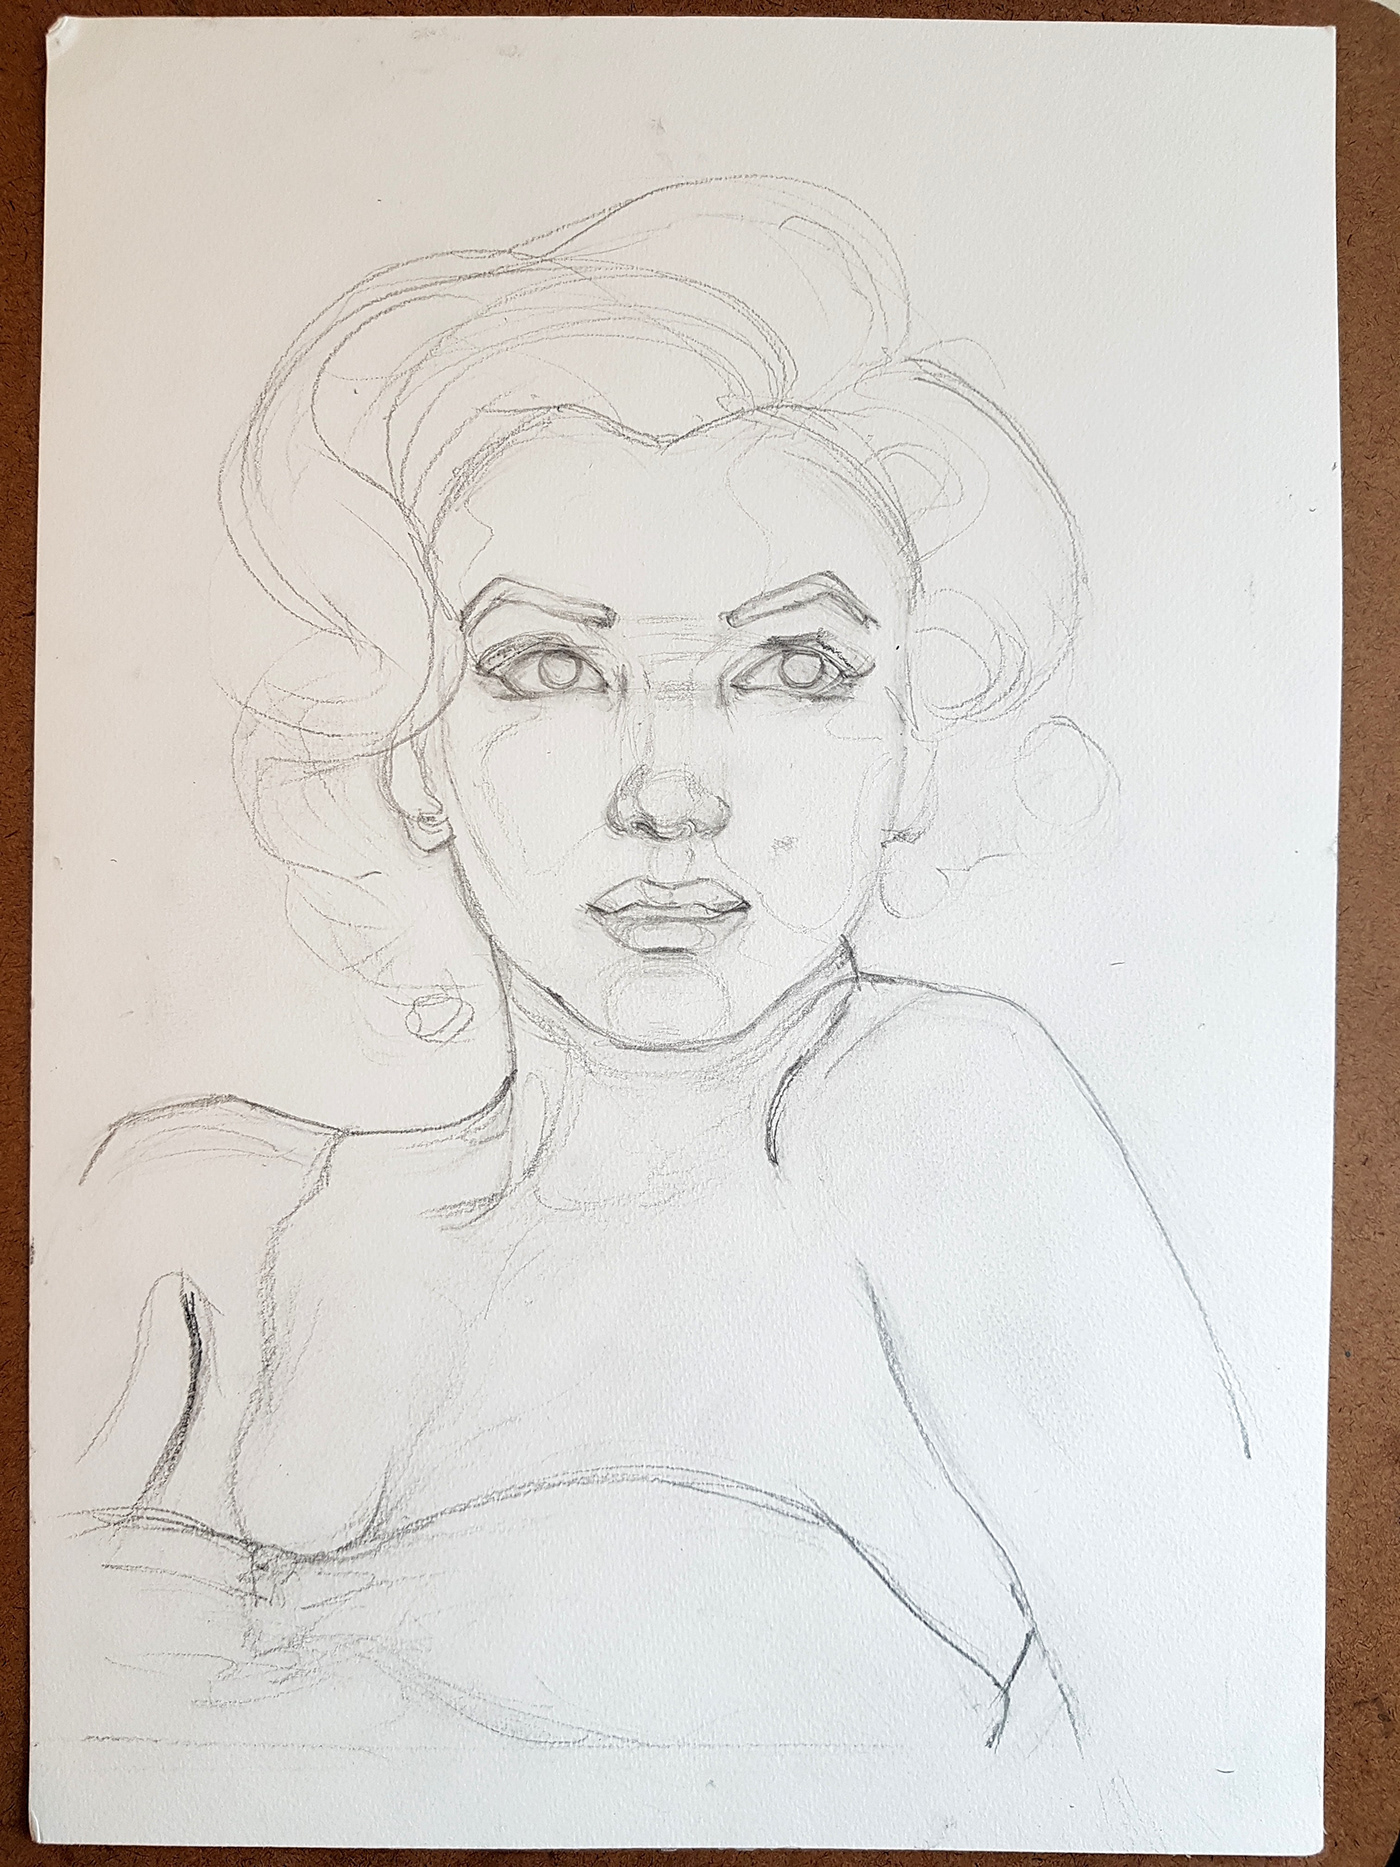 fine art ILLUSTRATION  Marilyn Monroe painting   watercolor